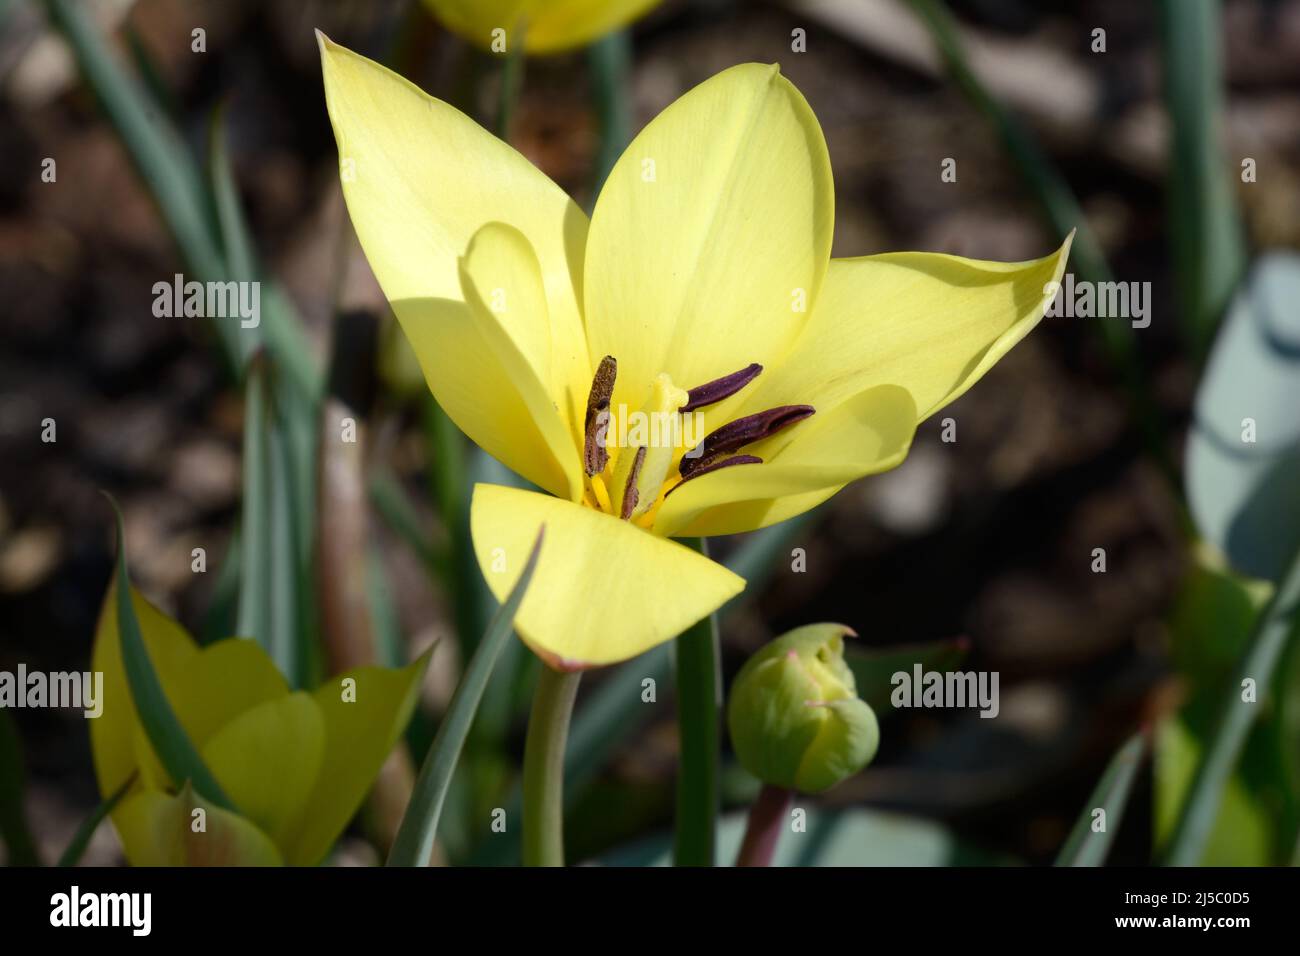 Tulipa Honky-Tonk Tilip Honky Tonk morbido giallo tulipano fiore con foglie verdi grigie Foto Stock